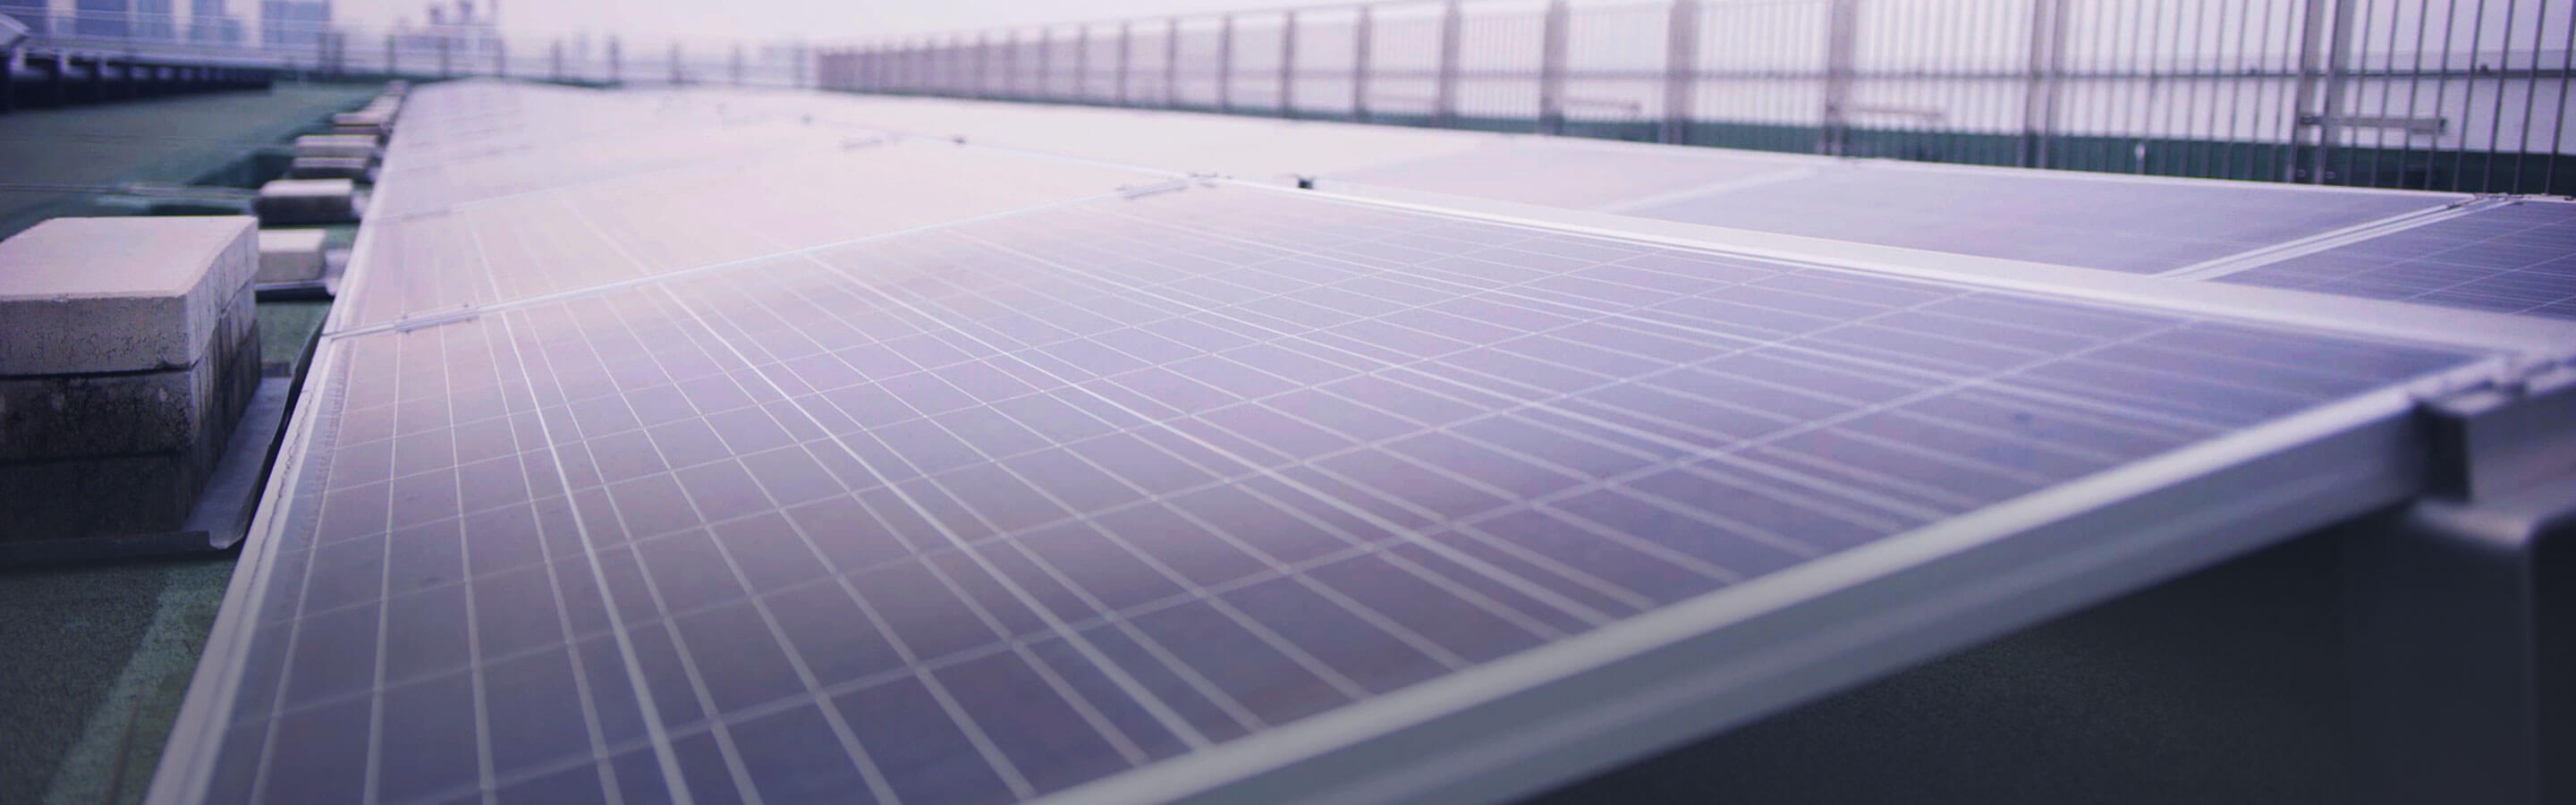 Solar panels generating renewable energy in a smart city